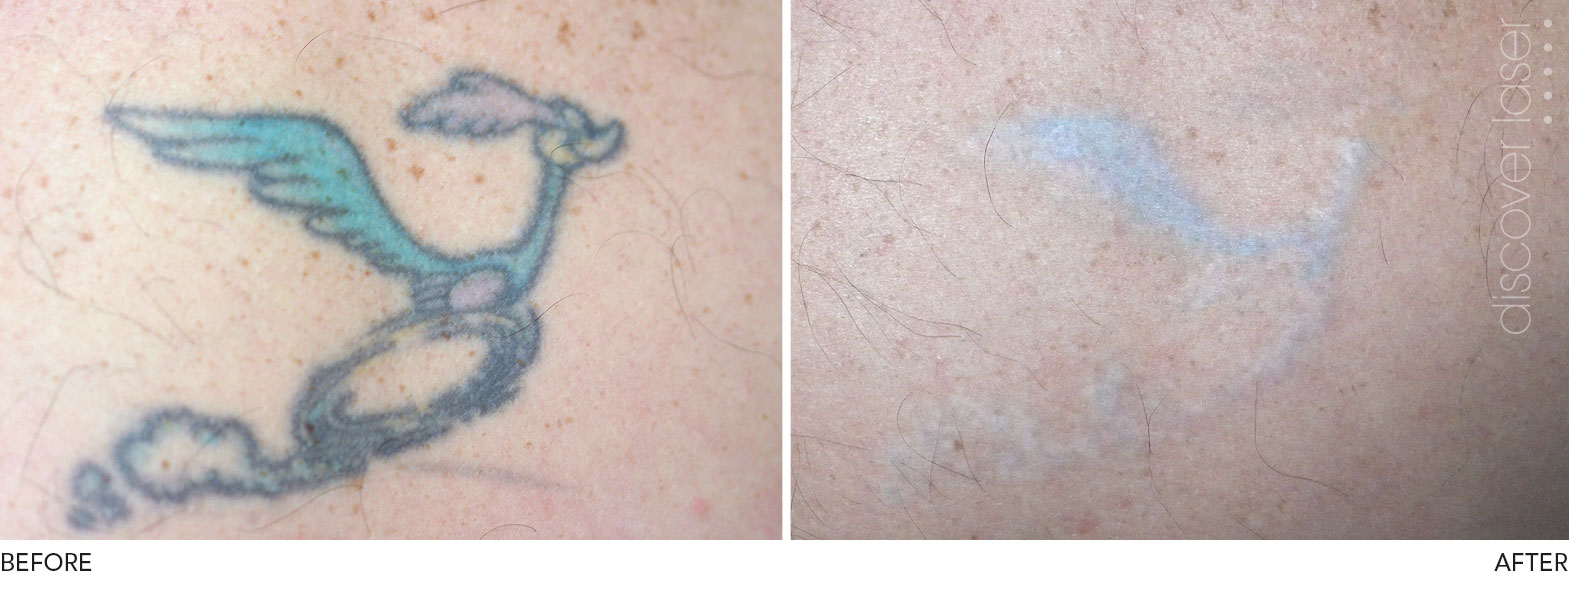 Laser Tattoo Removal laser tattoo removal - cosmetic clinic burnley ...